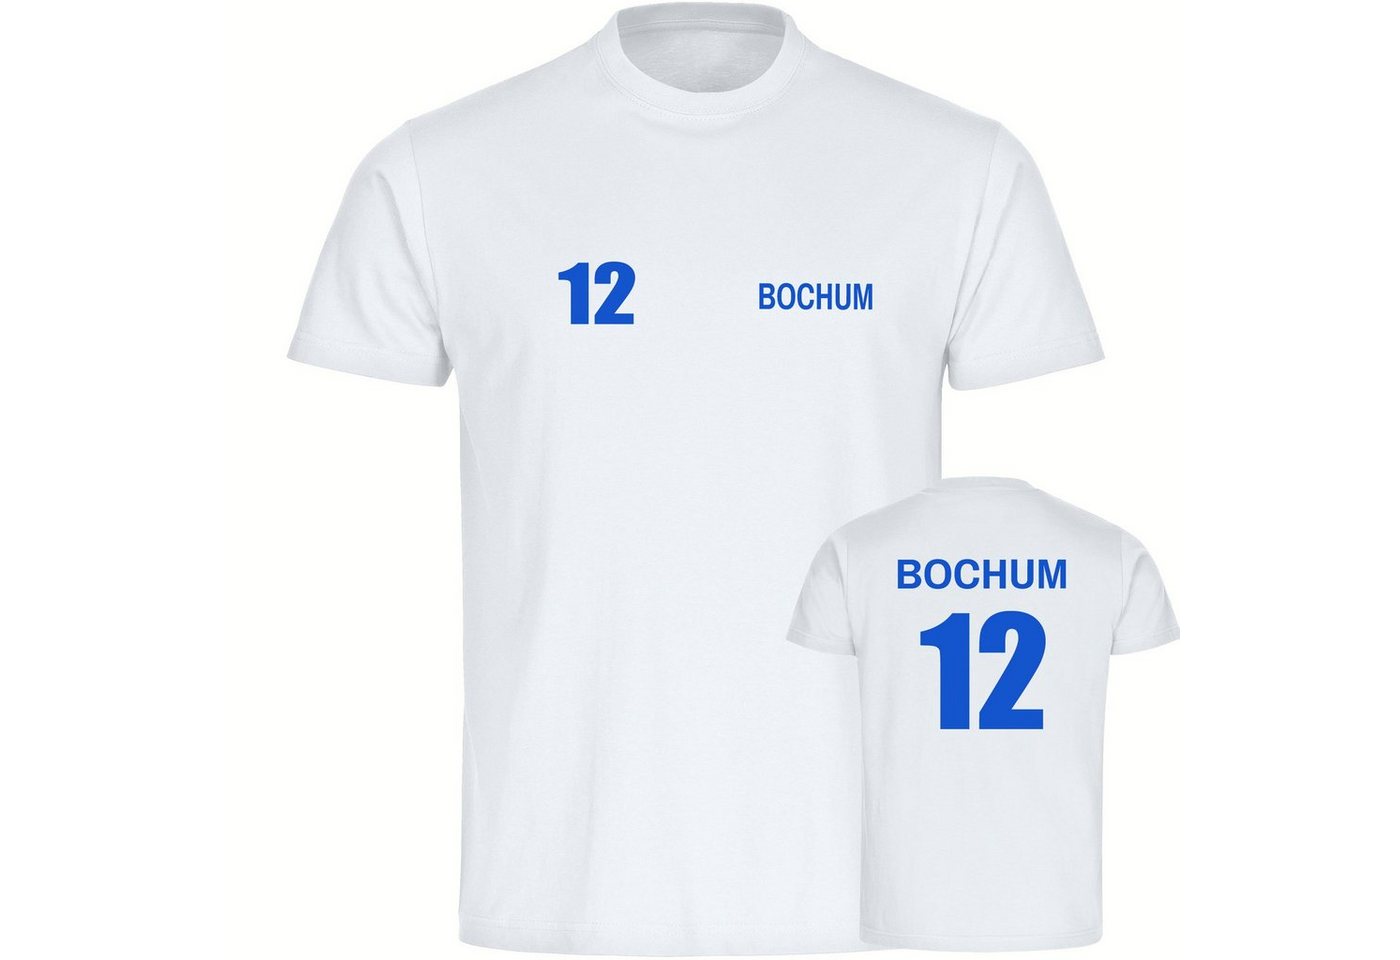 multifanshop T-Shirt Kinder Bochum - Trikot 12 - Boy Girl von multifanshop